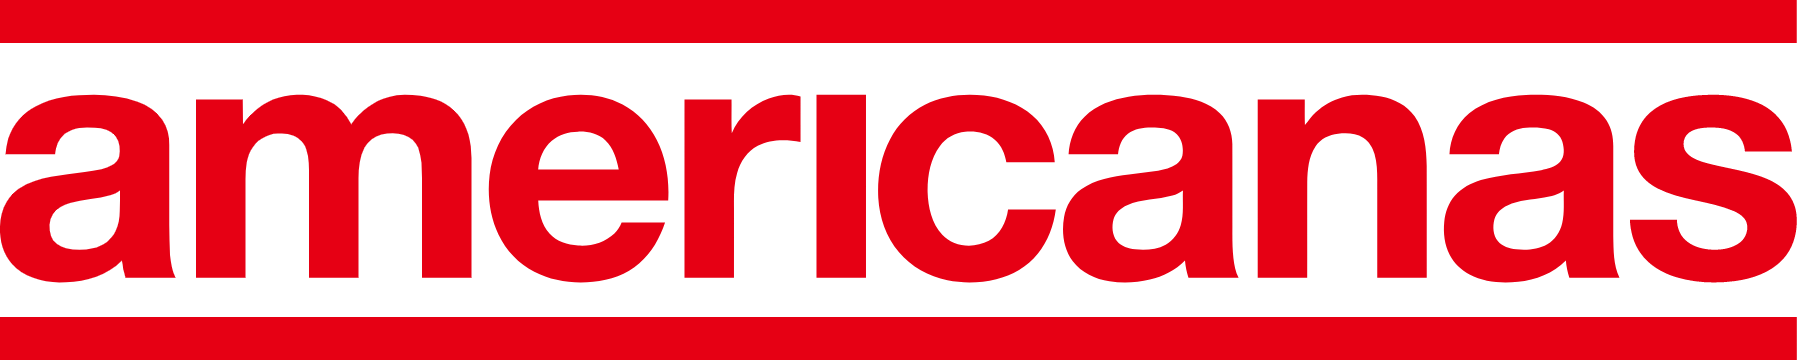 Americanas logo large (transparent PNG)